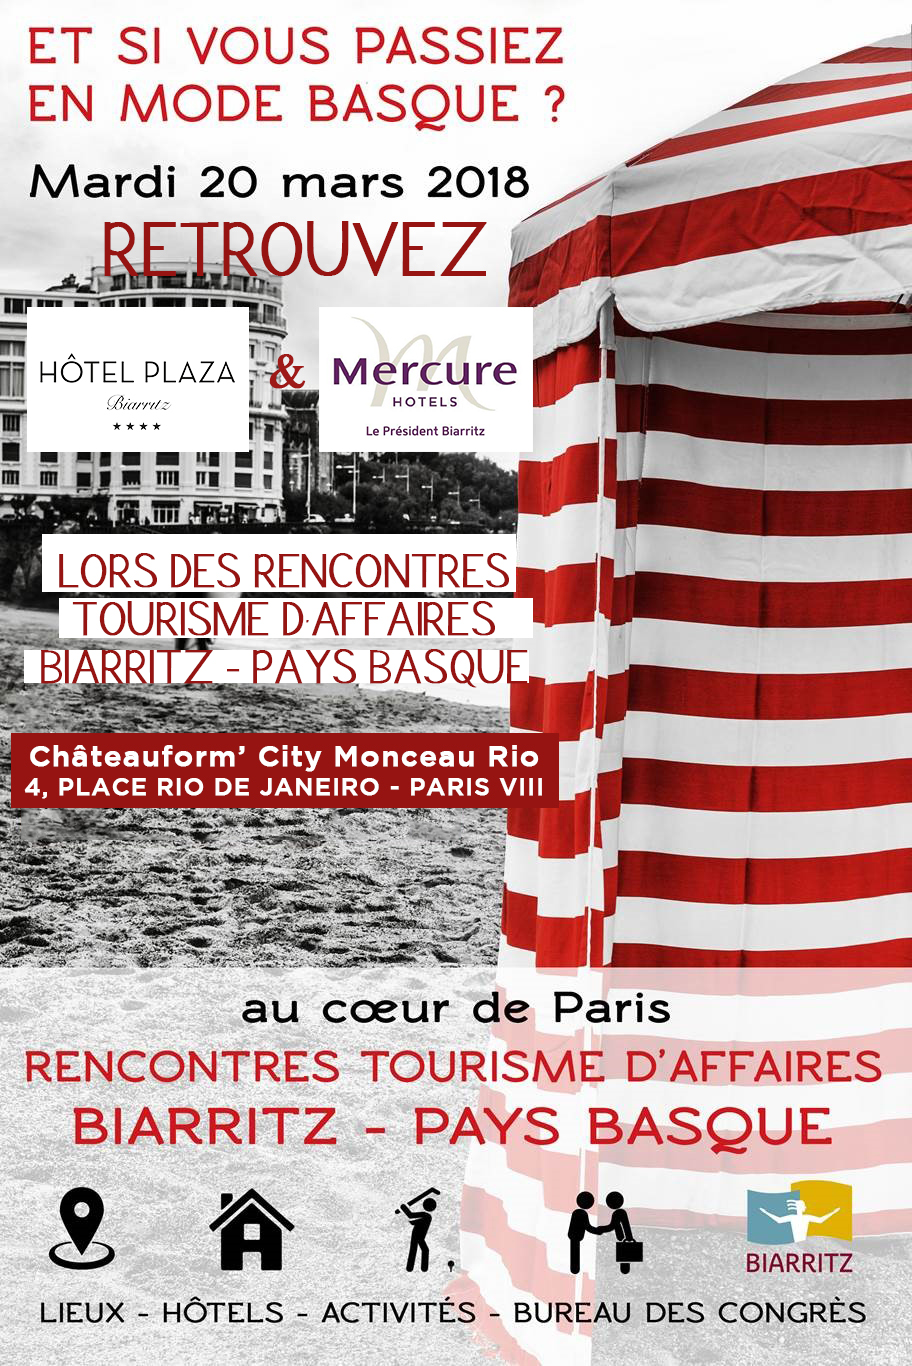 emailing Biarritz Tourisme